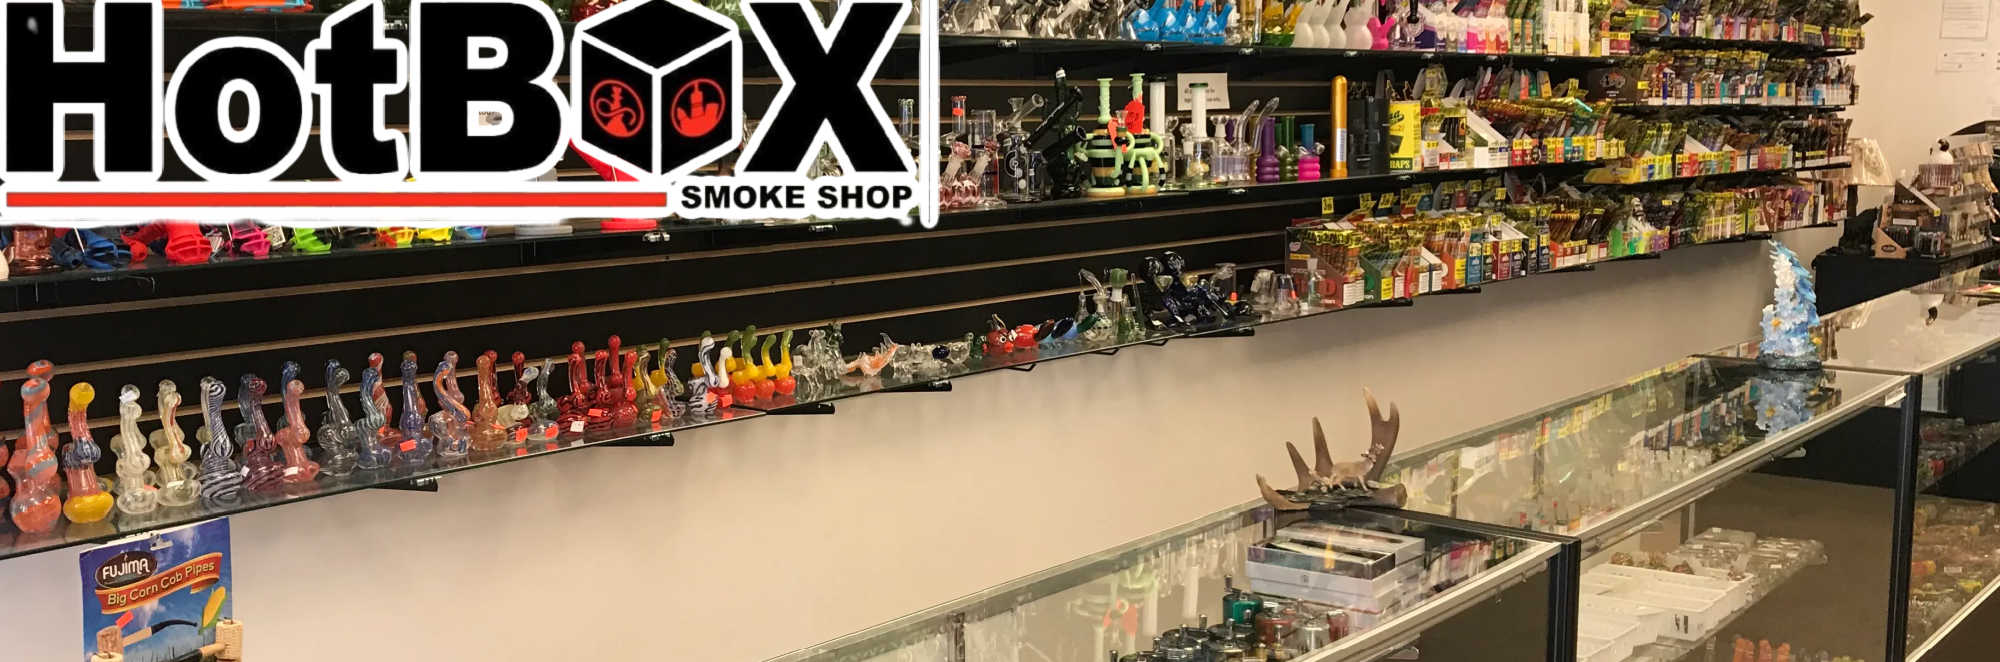 image of hot box smoke shop 